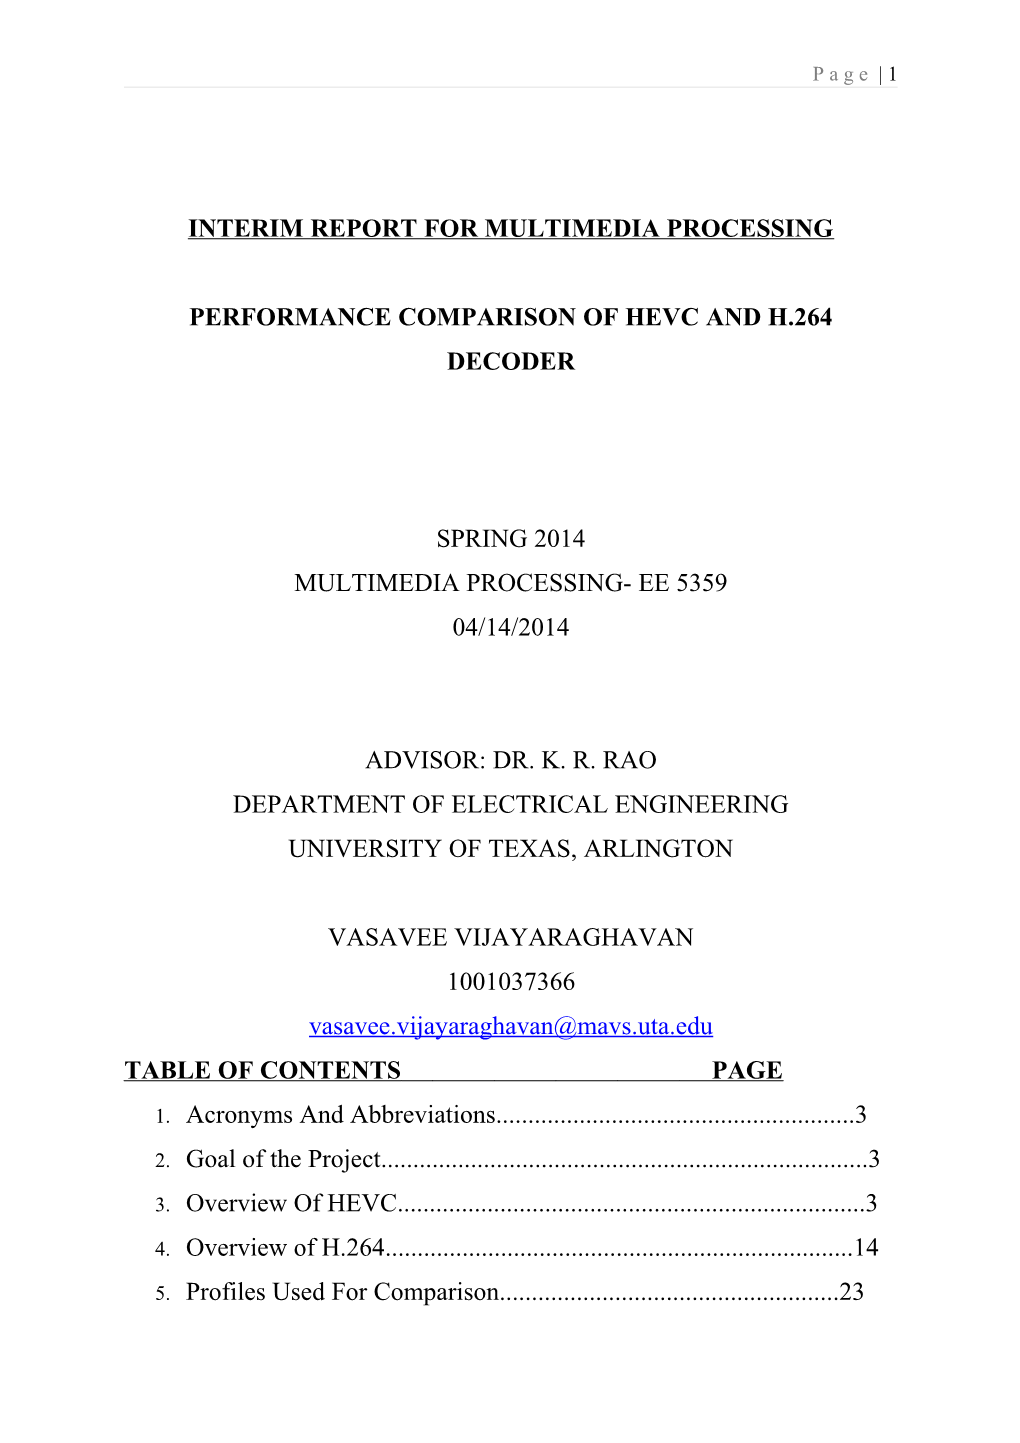 Interim Report for Multimedia Processing